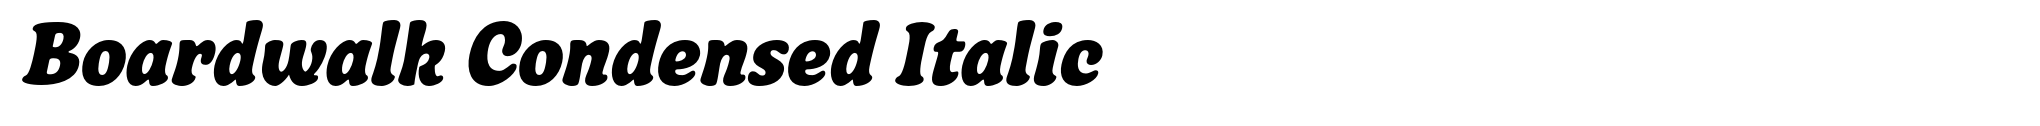 Boardwalk Condensed Italic image